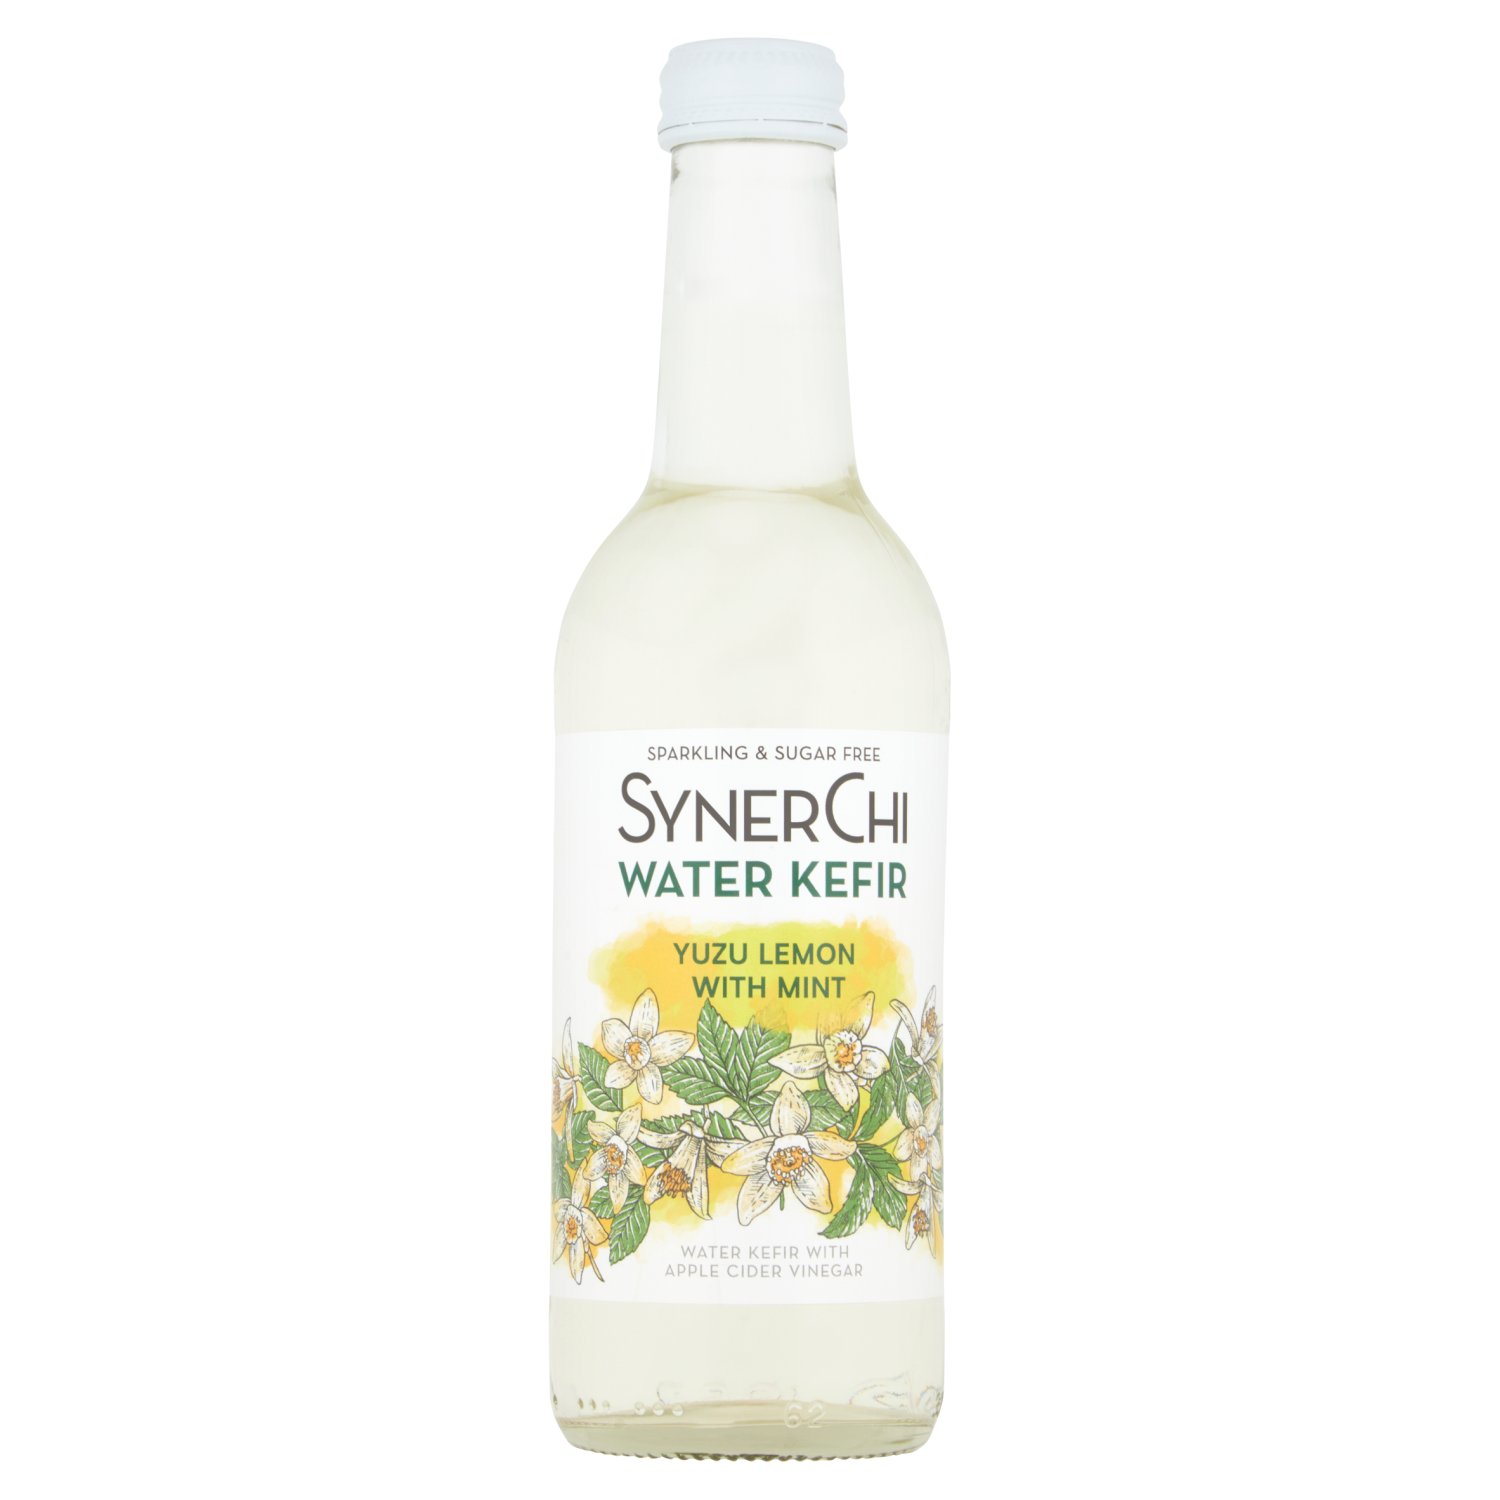 Synerchi Water Kefir Lemon Yuzu Mint (330 ml)